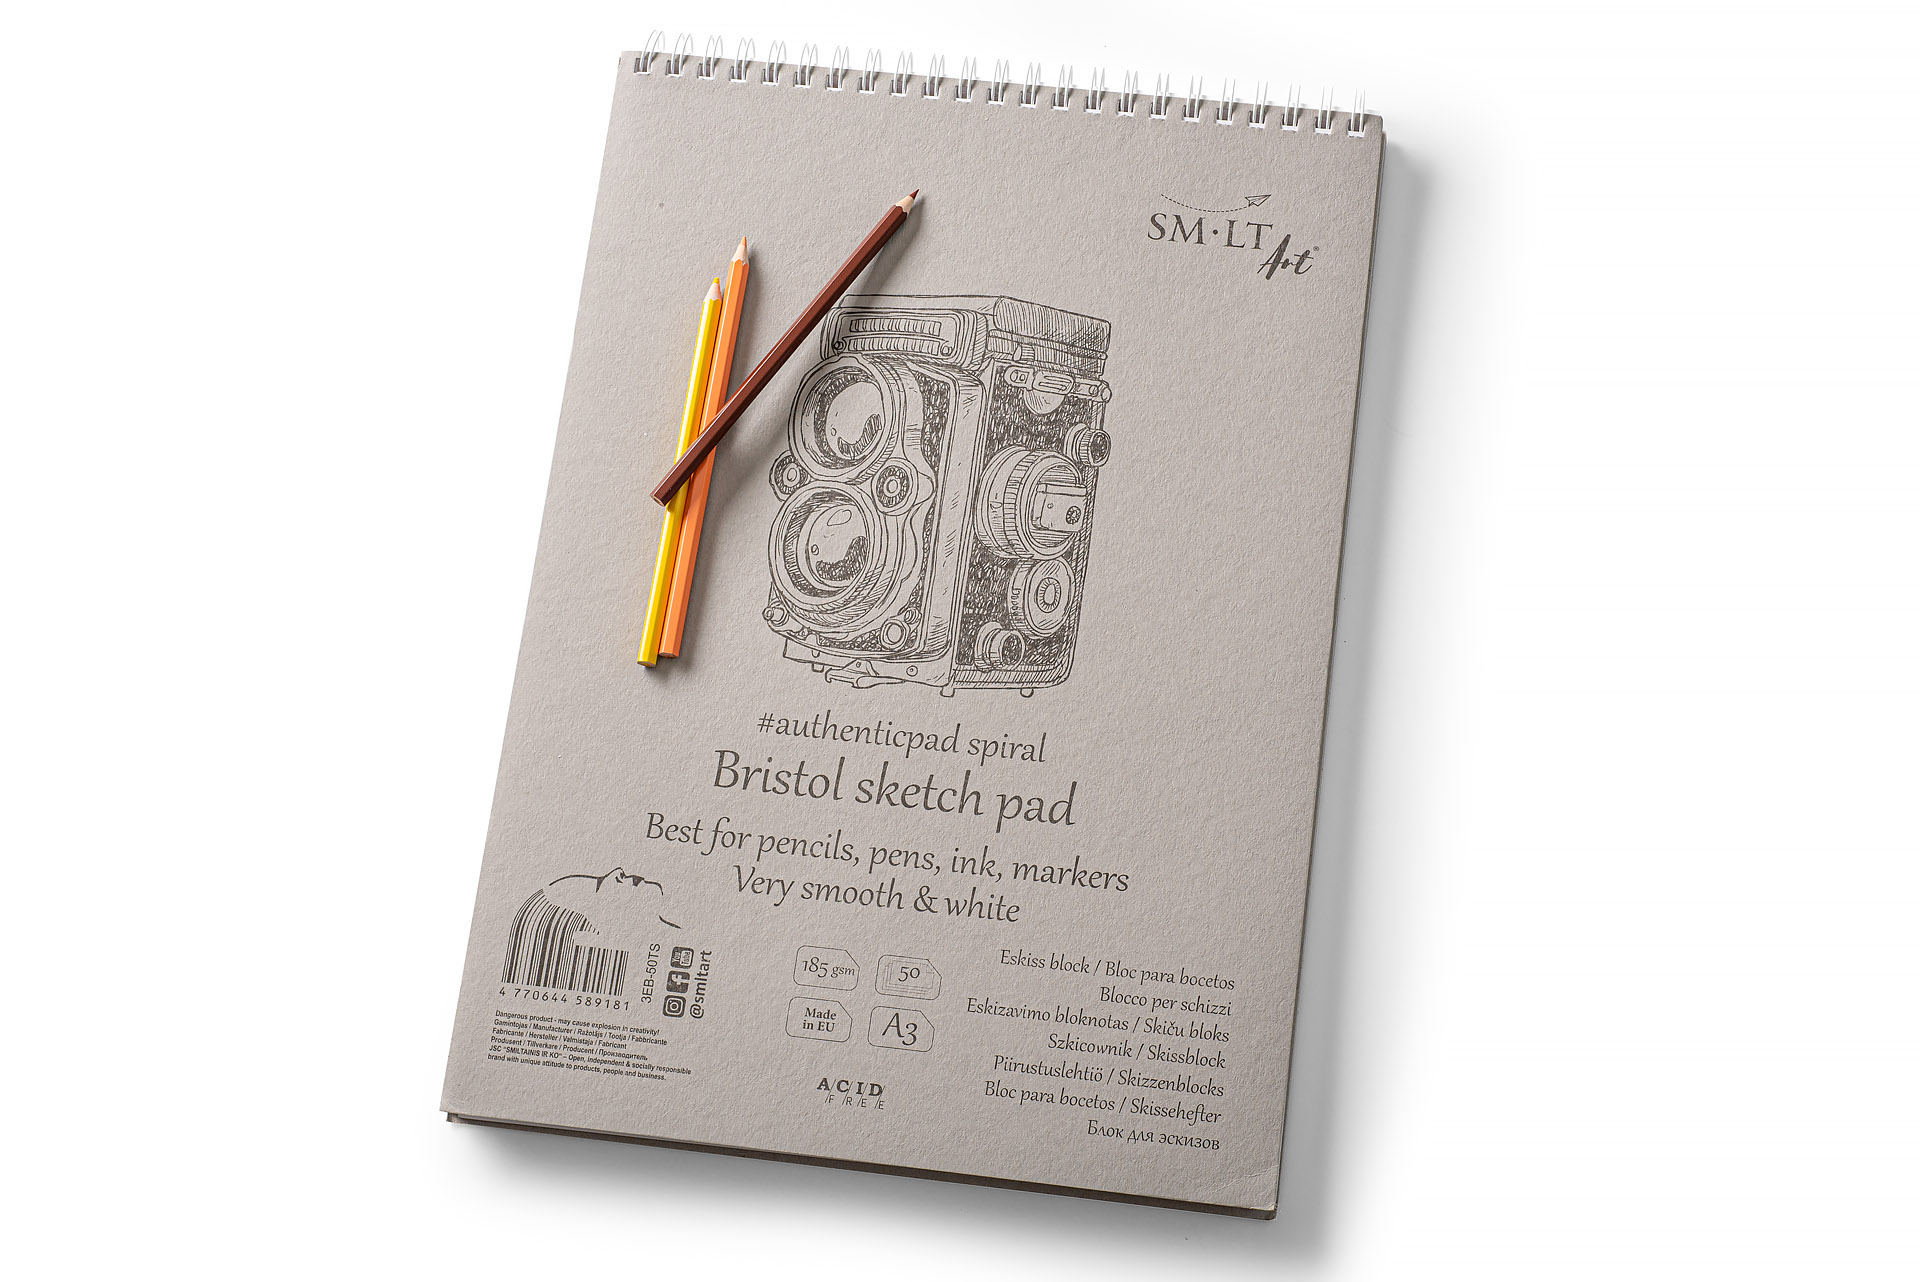 SM-LT Spiral Sketch Pad Authentic Marker